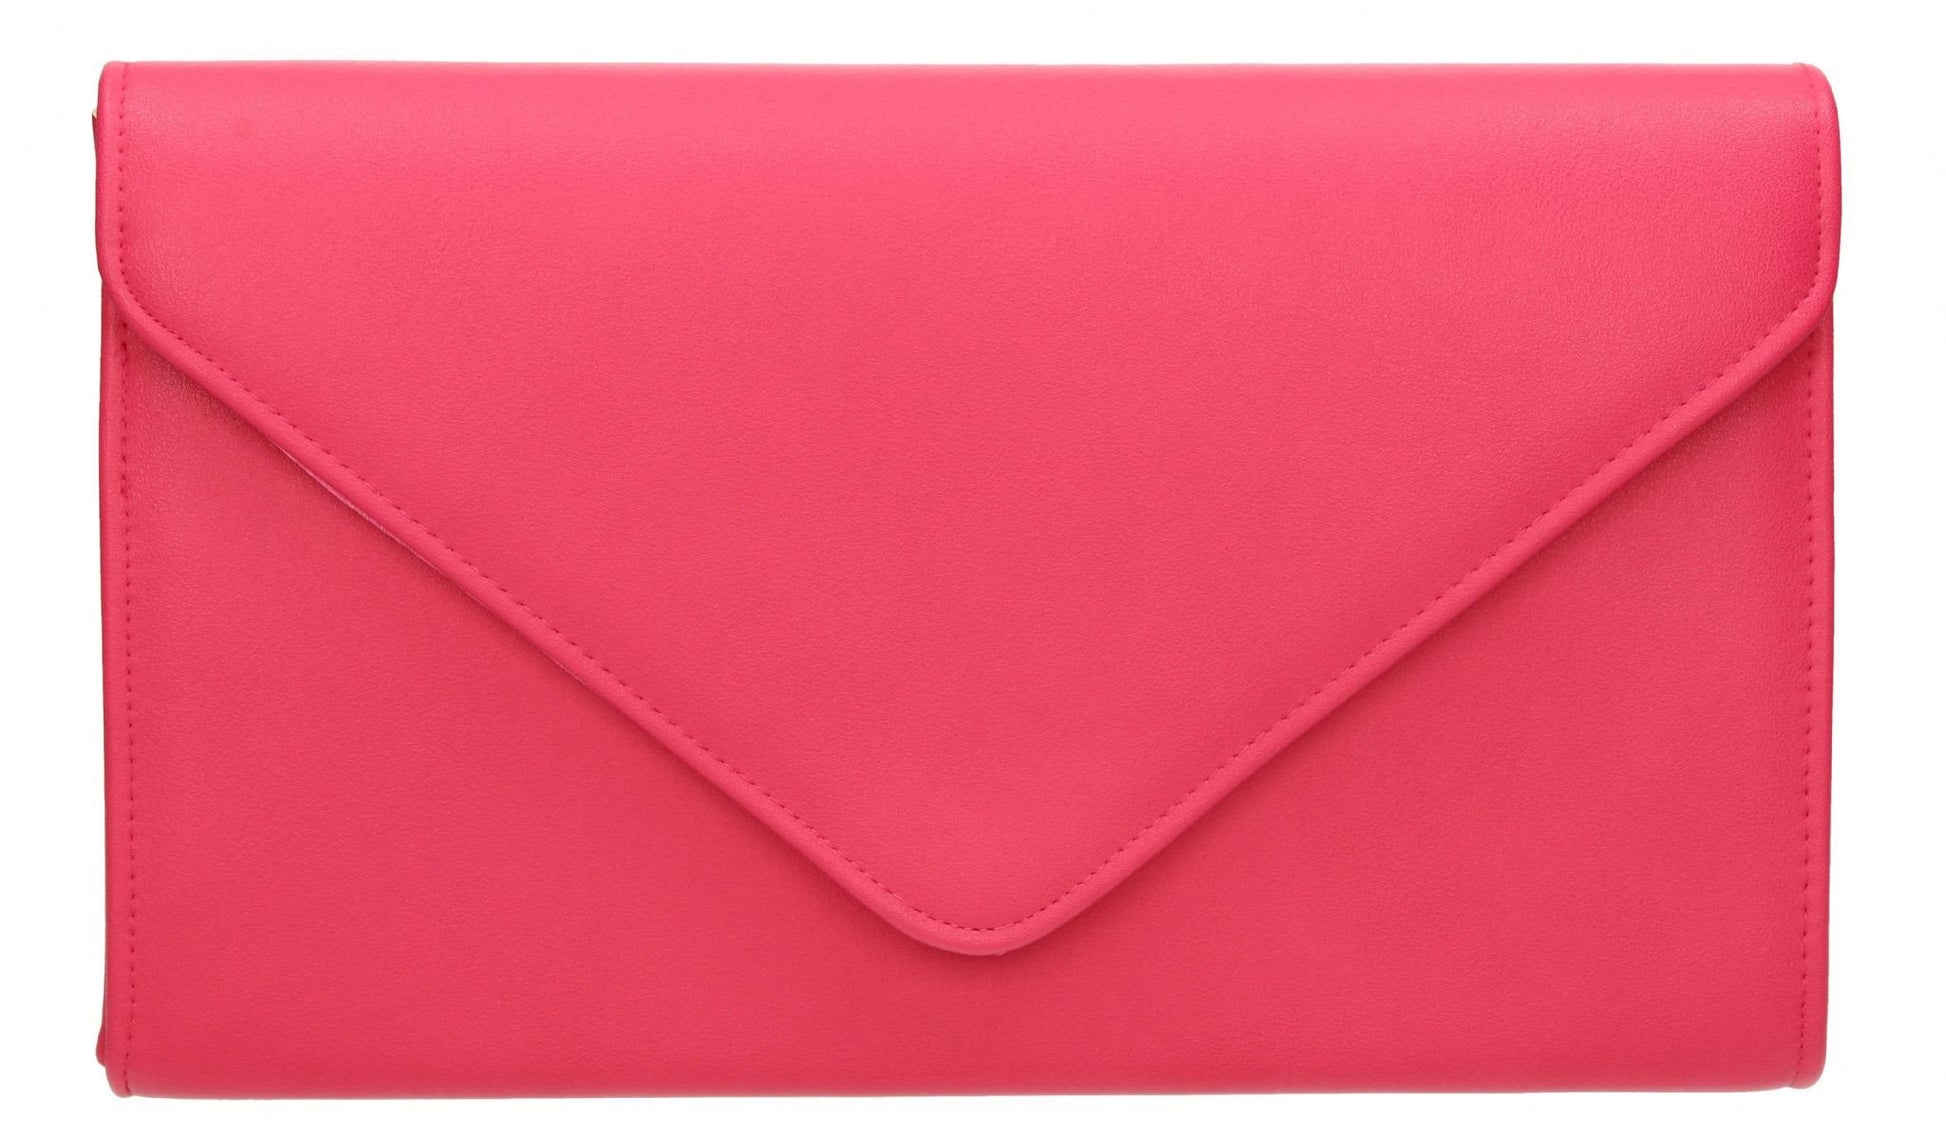 SWANKYSWANS Jenny Envelope Clutch Bag Fuschia Cute Cheap Clutch Bag For Weddings School and Work